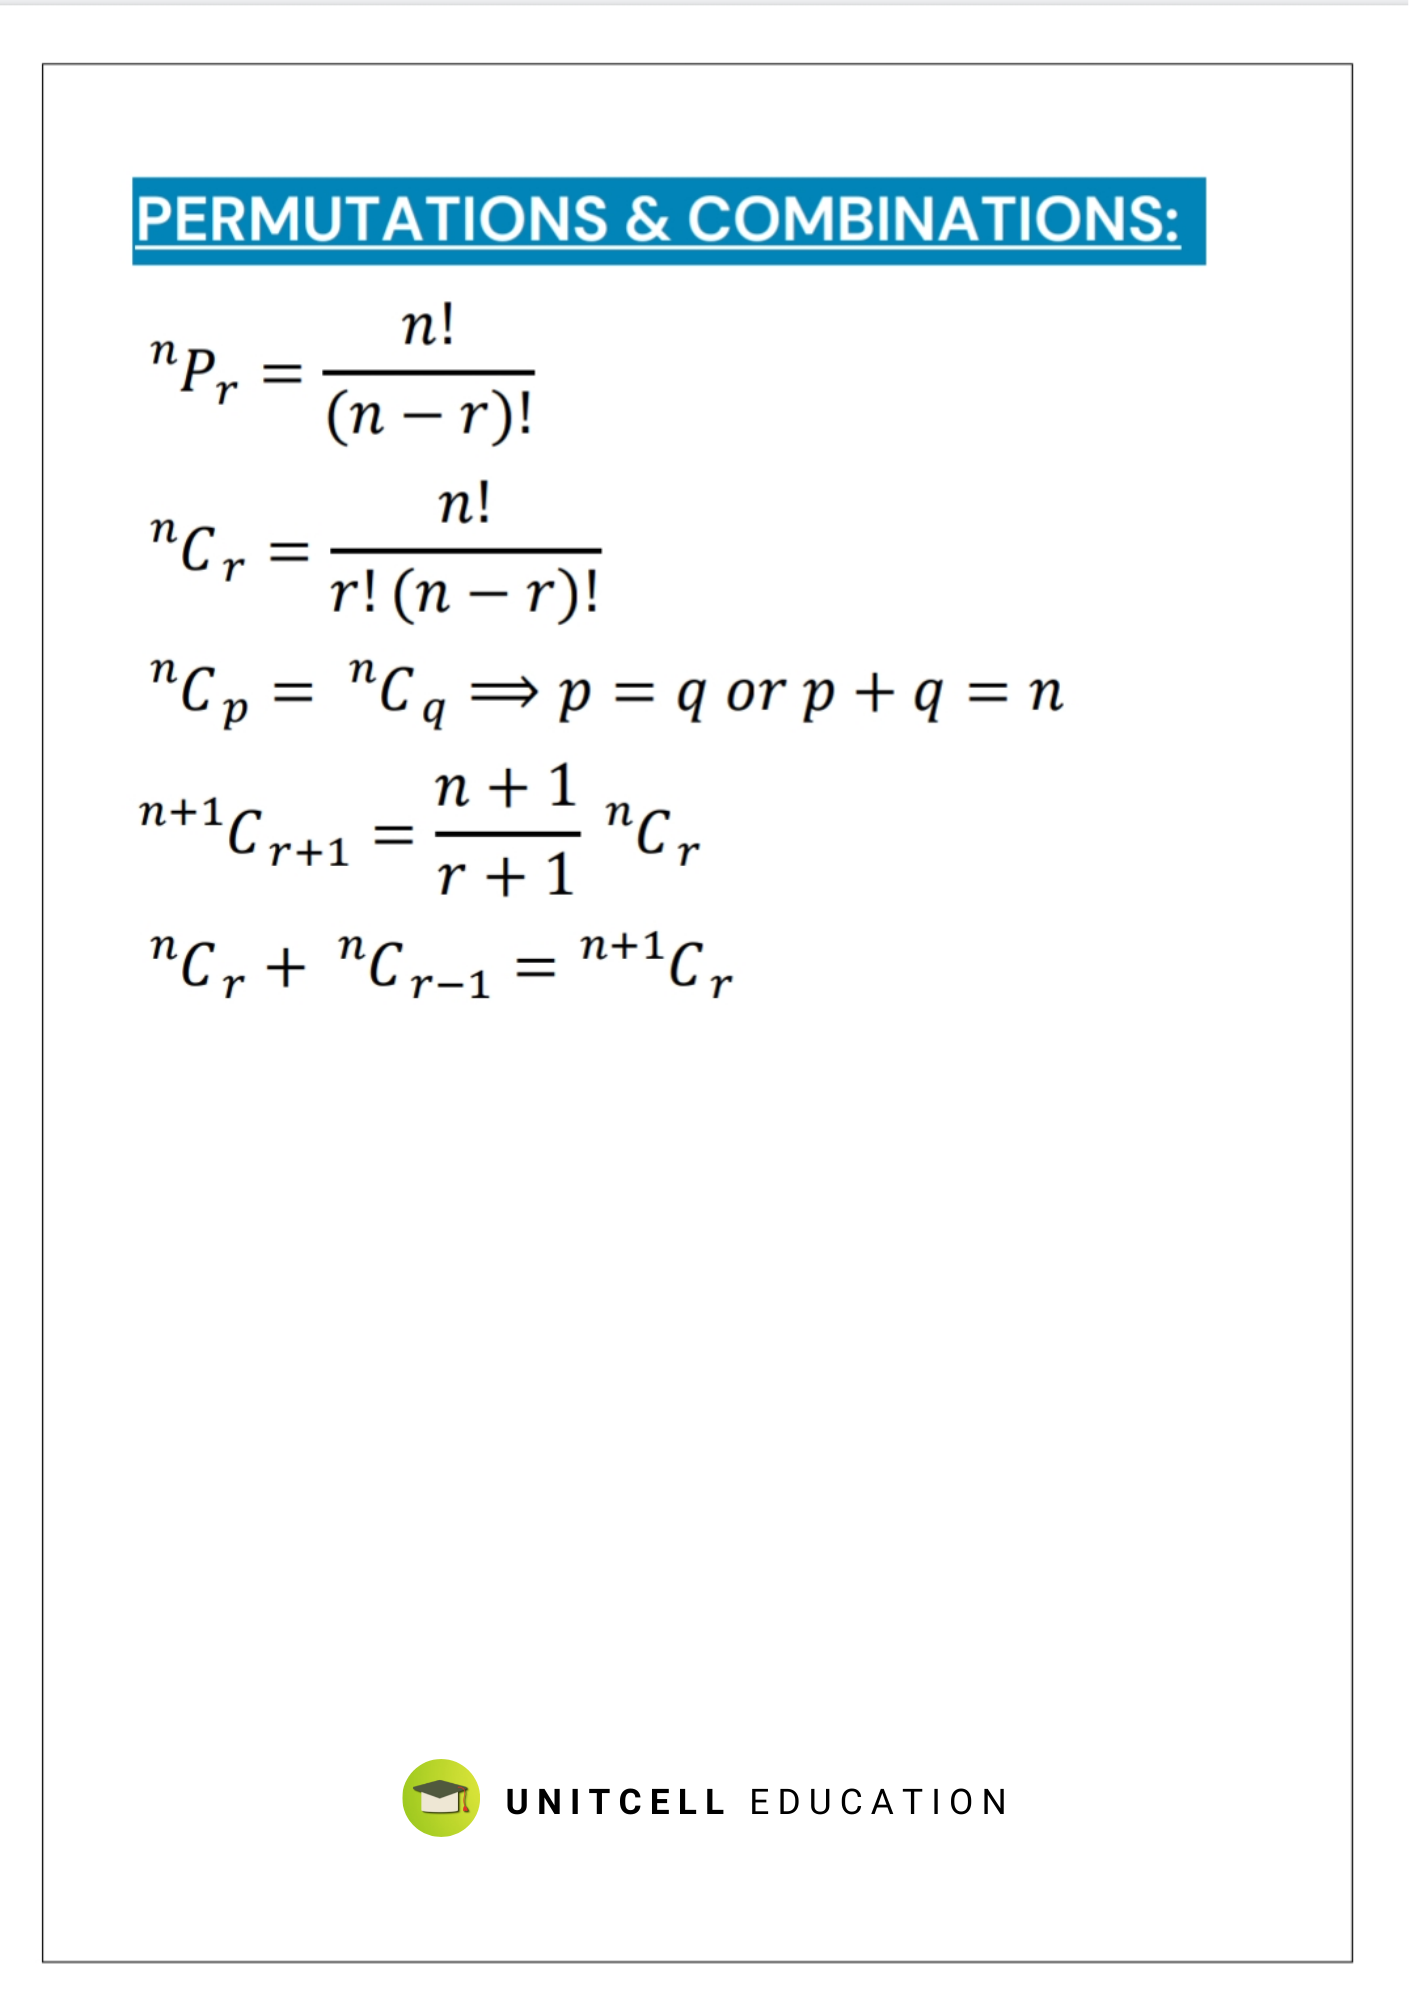 Permutations & combinations formulas